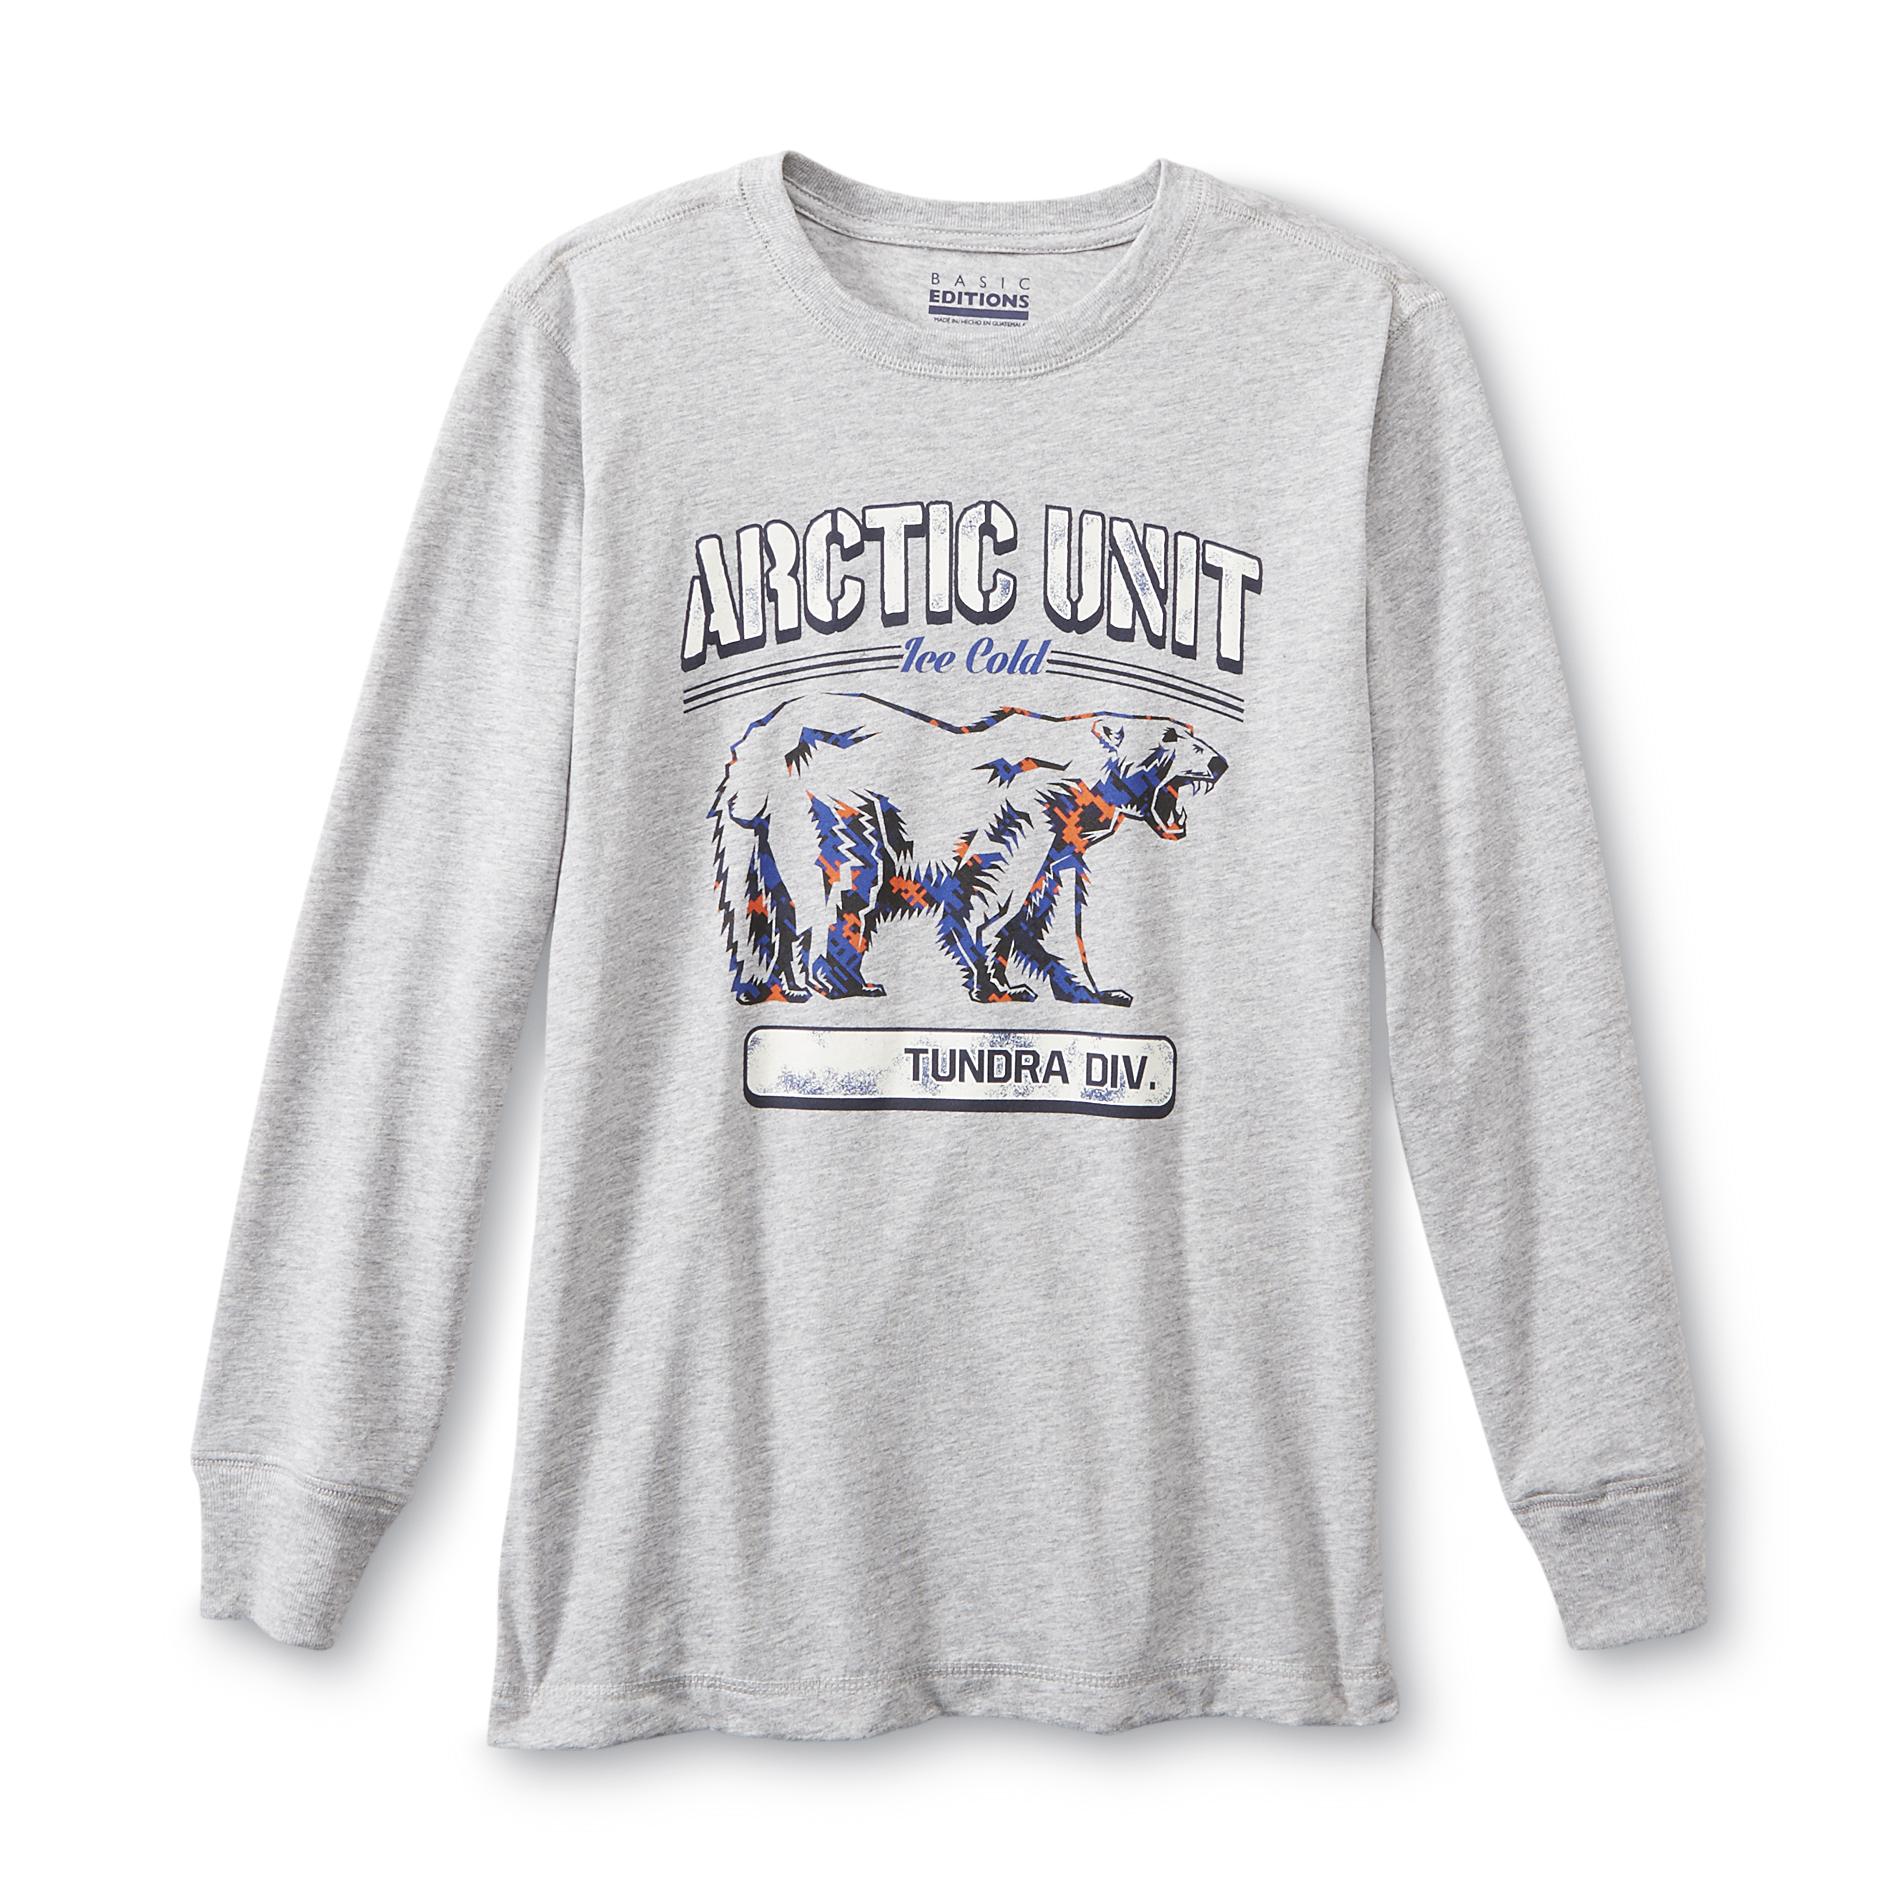 Basic Editions Boy's Graphic T-Shirt - Arctic Unit